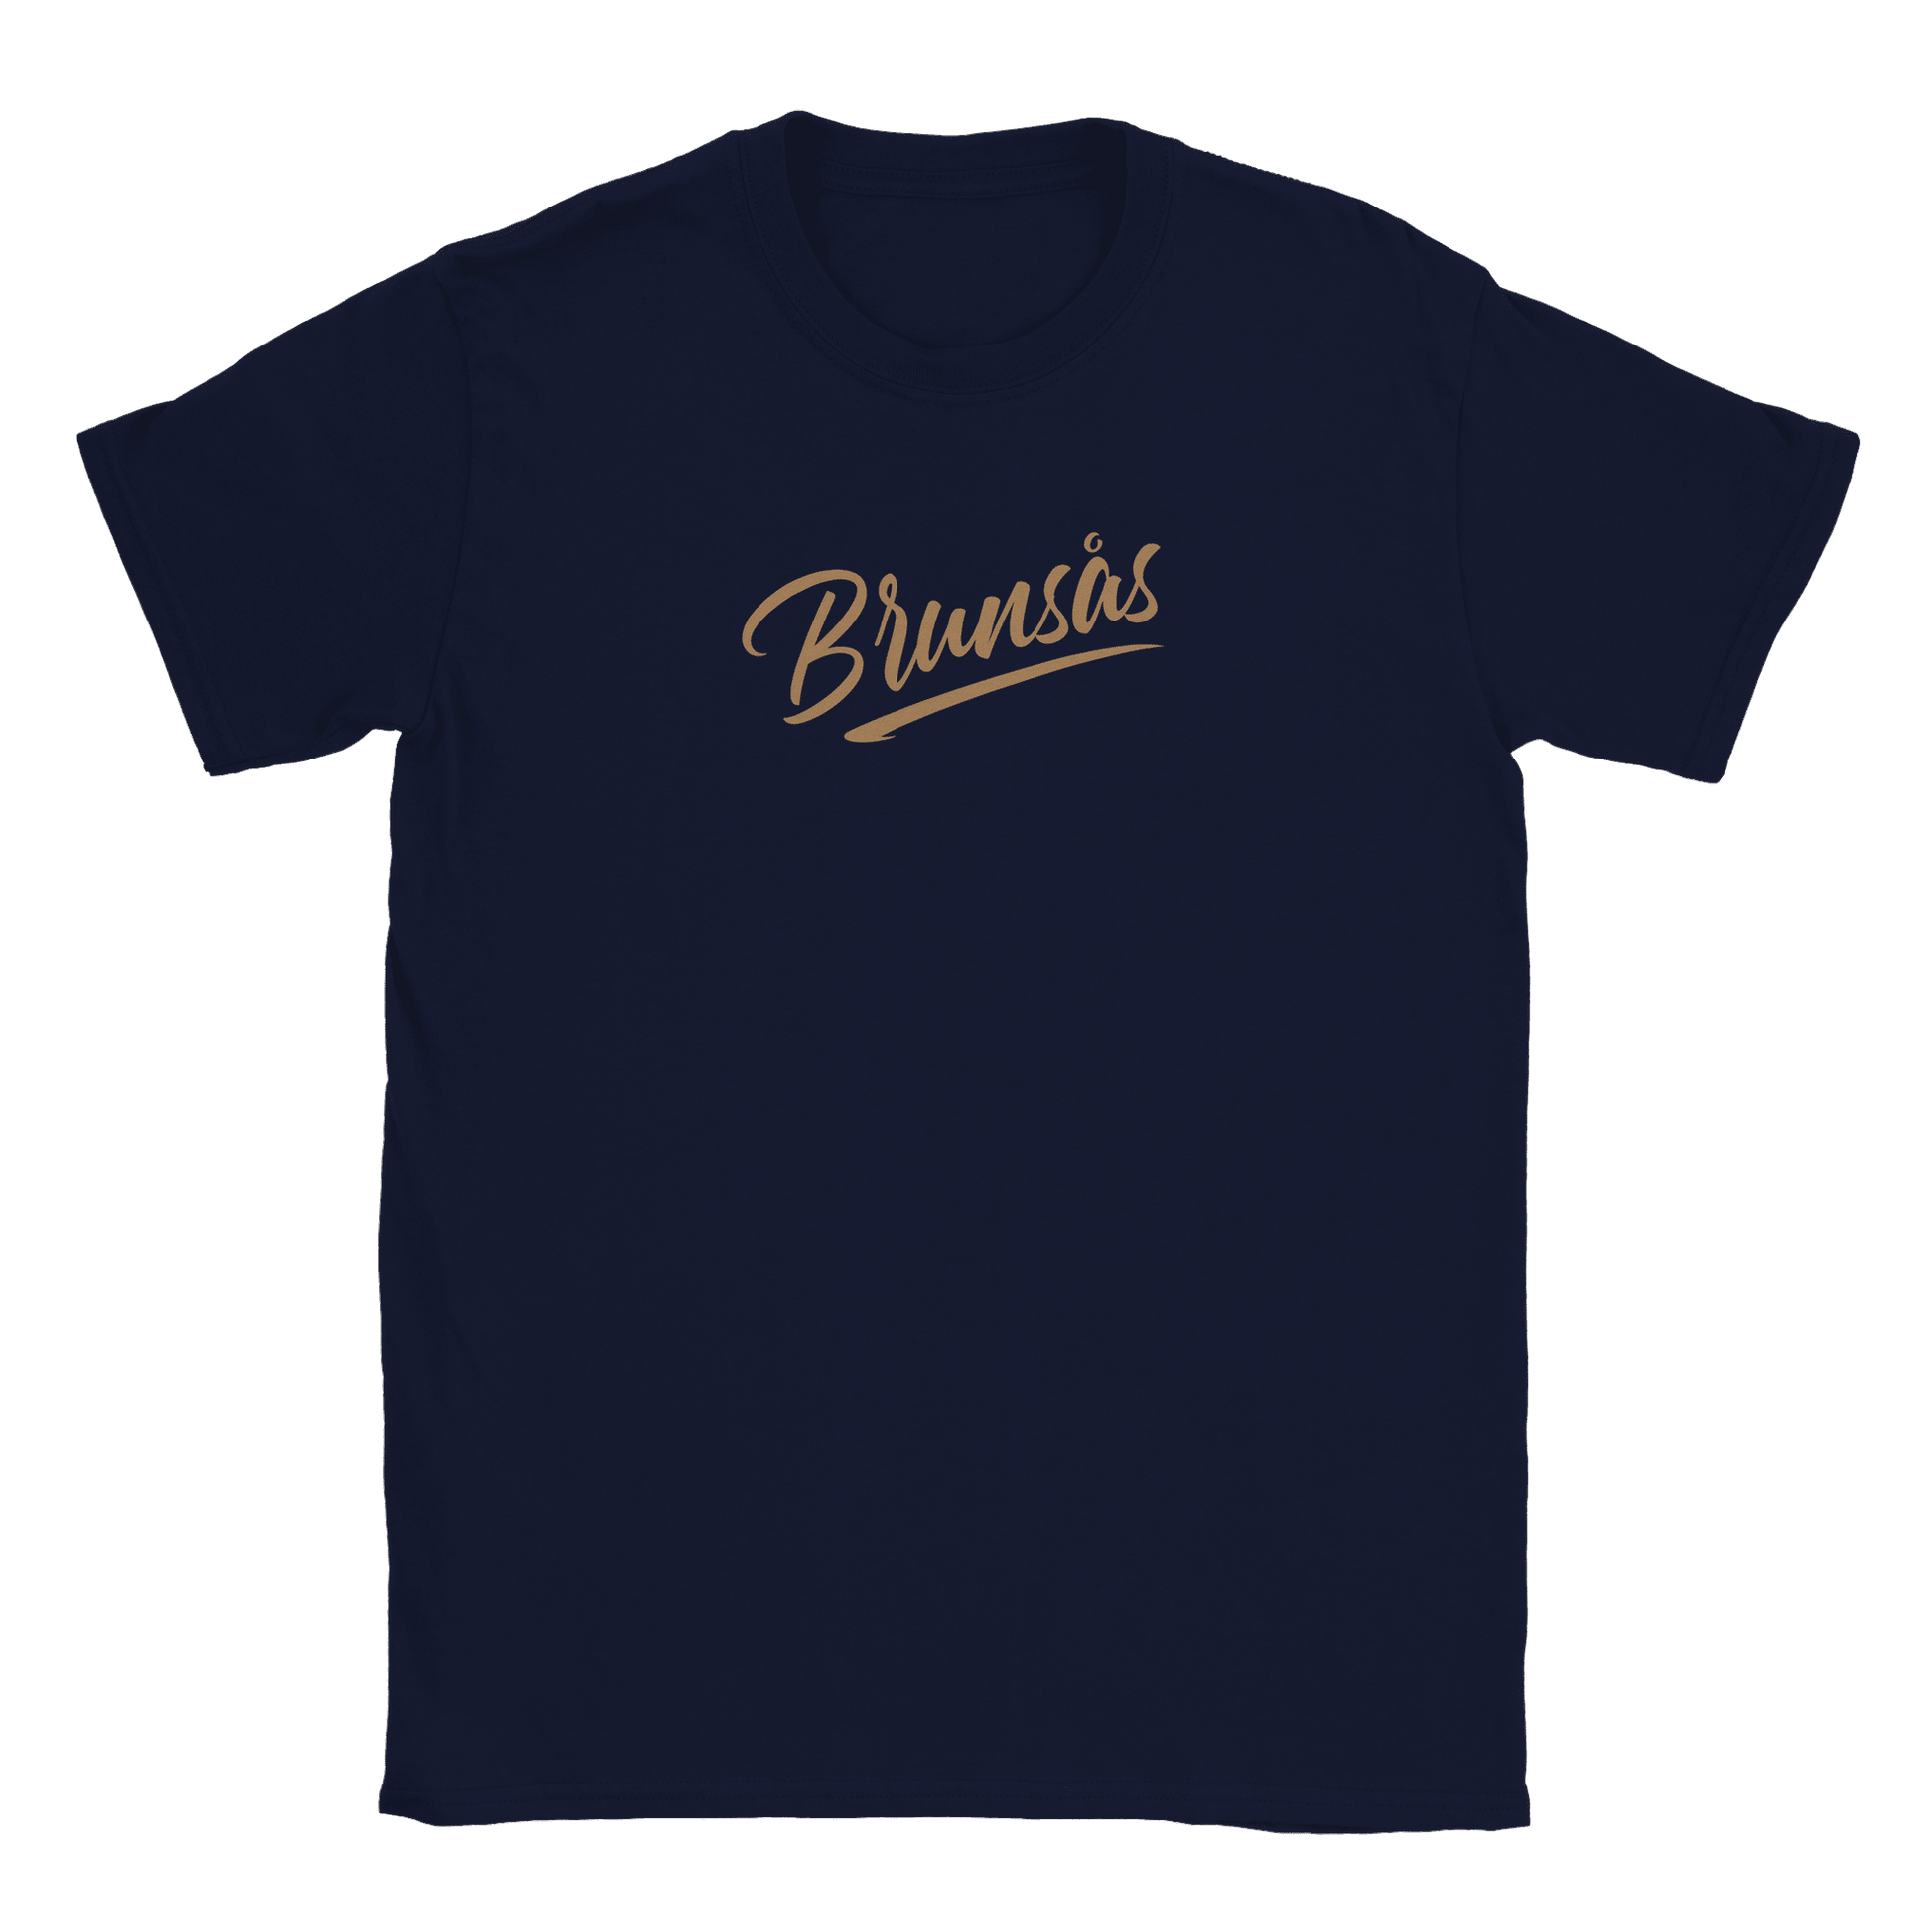 Brunsås - T-shirt Navy